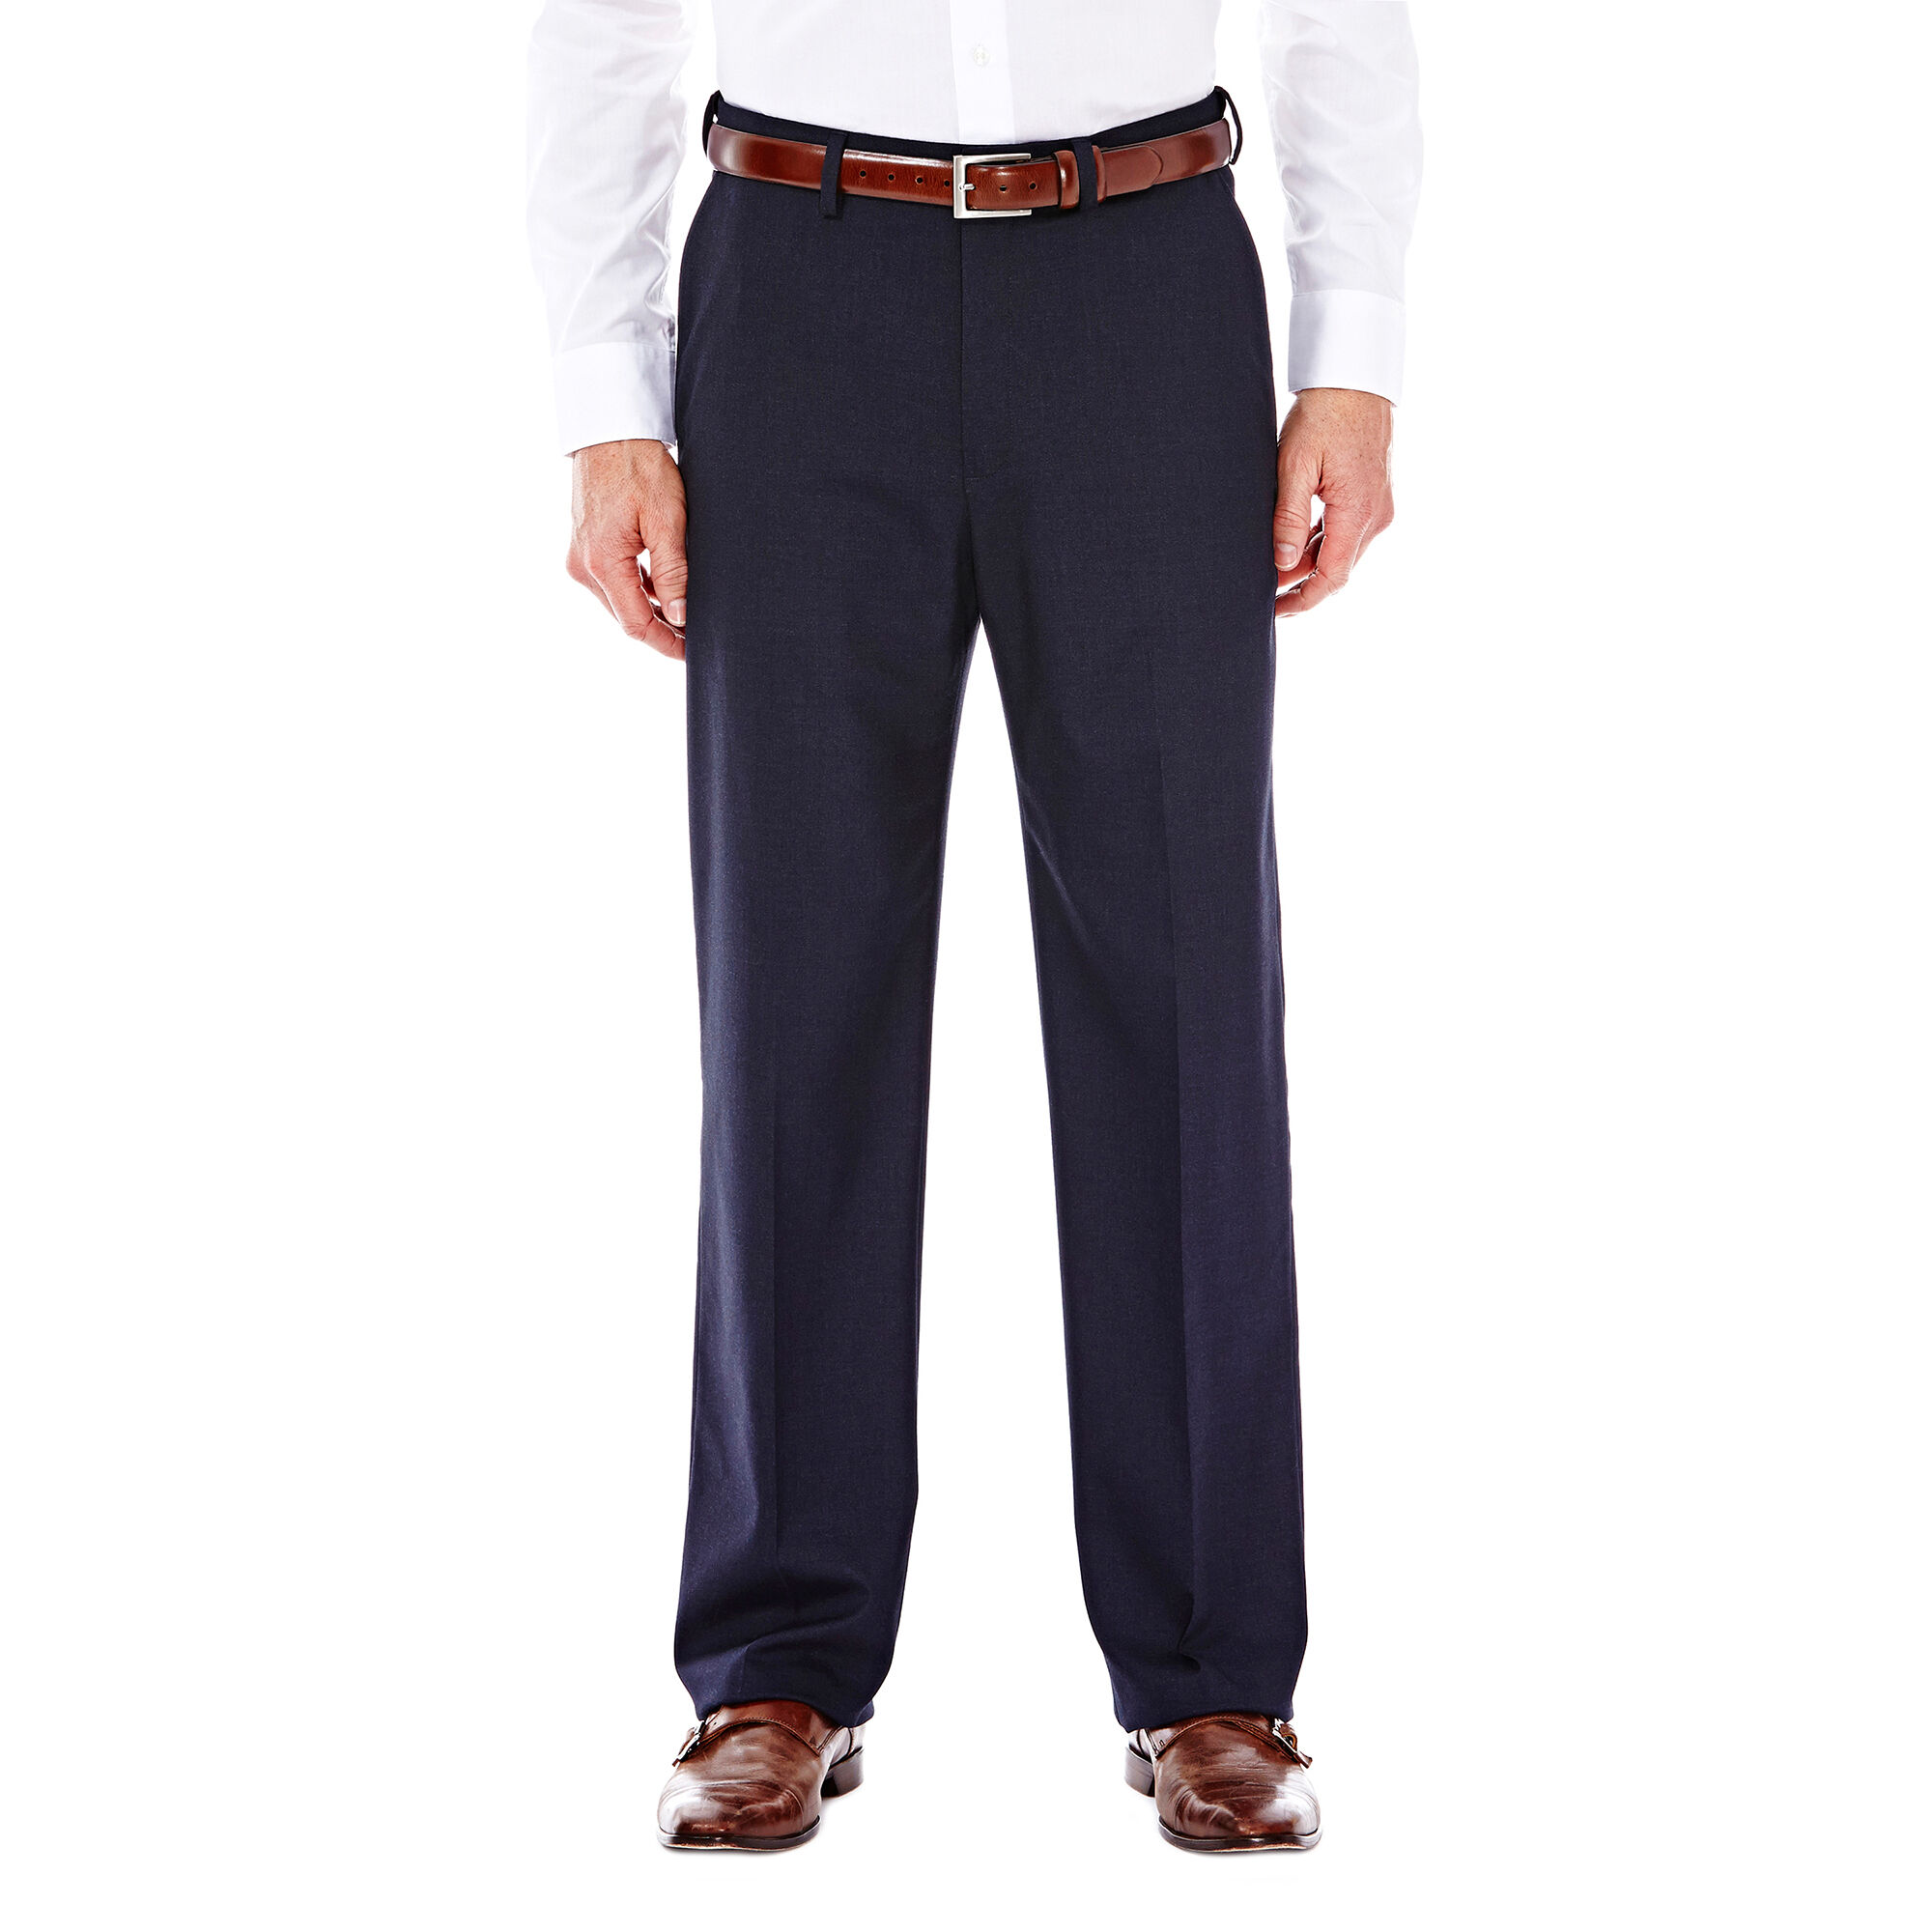 J.M. Haggar Premium Stretch Suit Pant - Flat Front Dark Navy (HY00182 Clothing Pants) photo